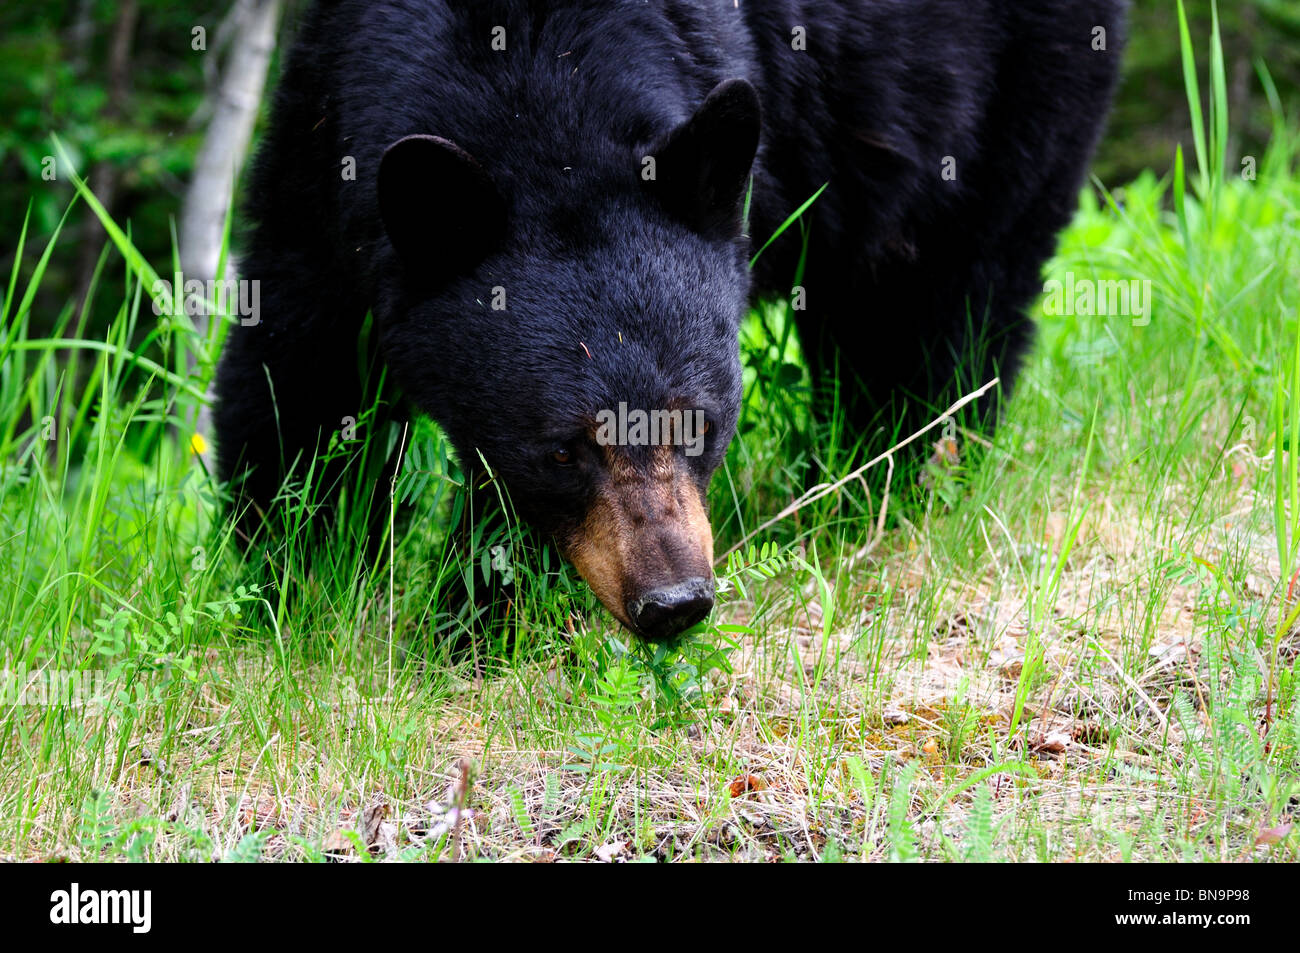 A full grown black bear in the wild. Jasper National Park, Alberta, Canada. Stock Photo